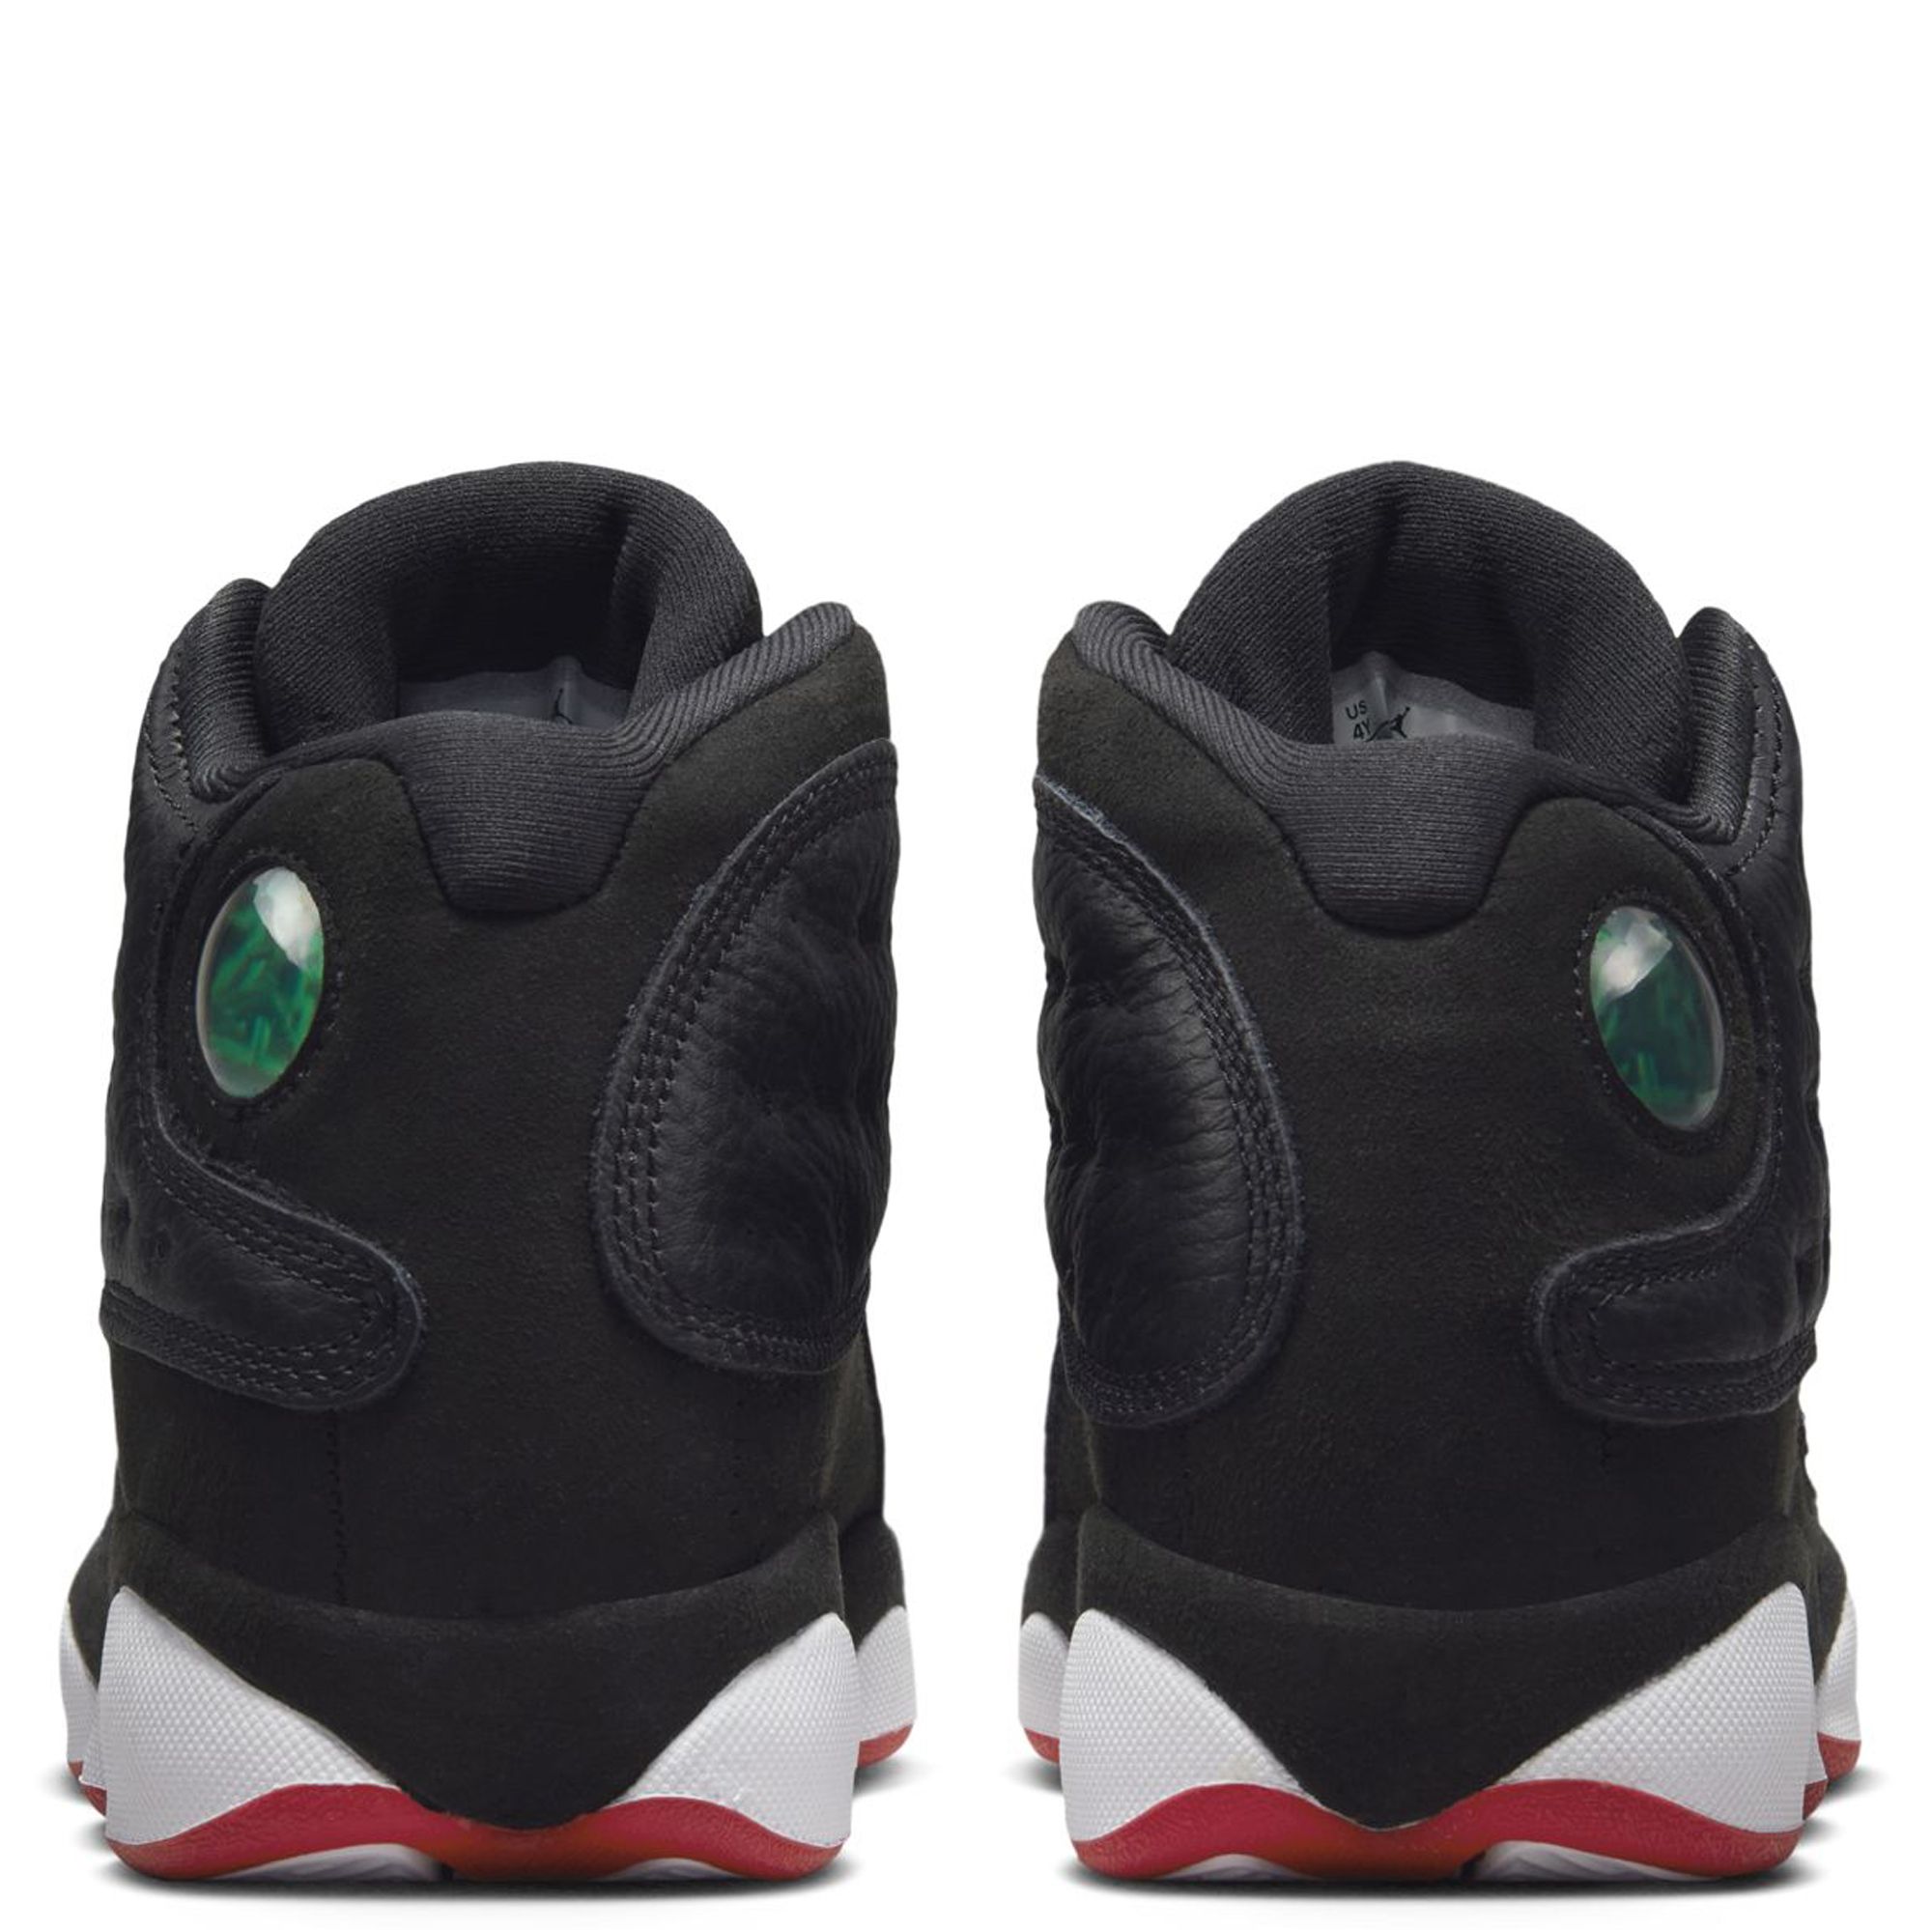 Jordan 13 Retro (PS) Little Kids' Shoes Black-White-True Red dj3005-062 